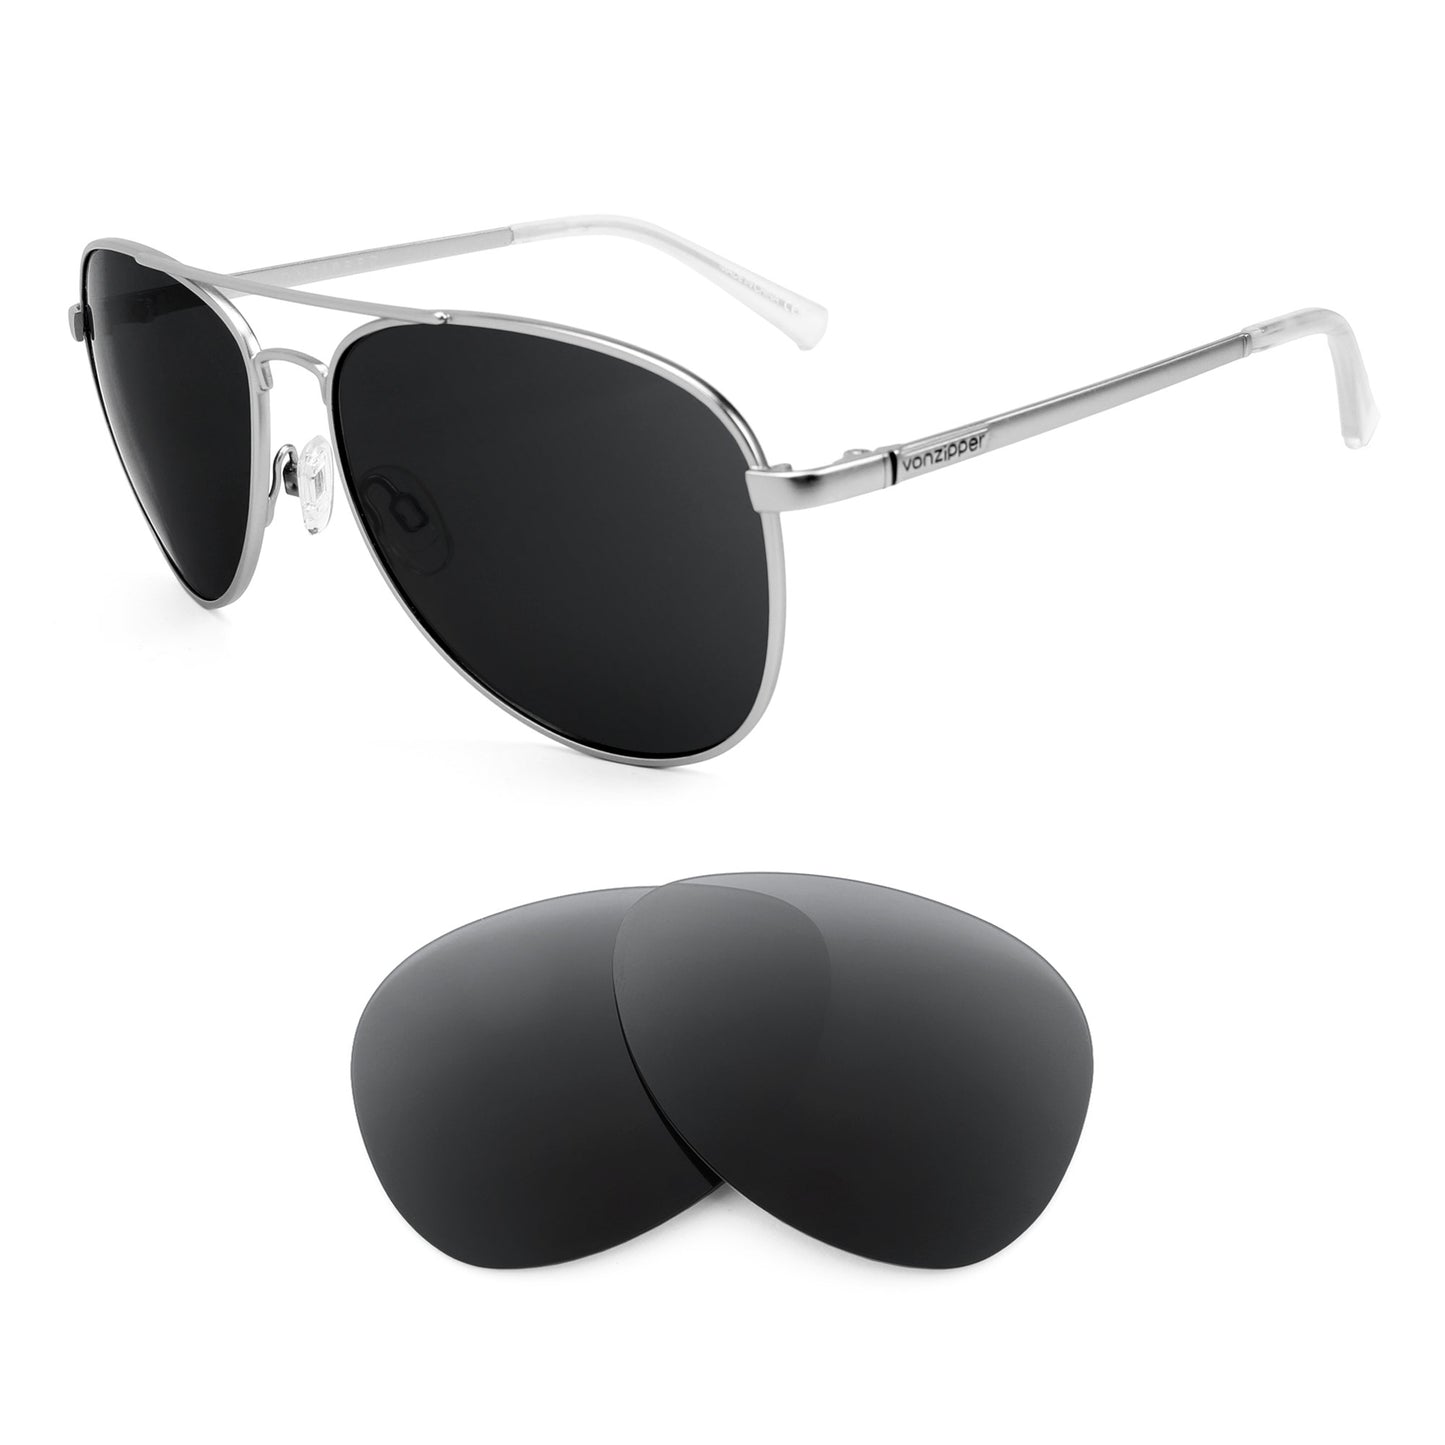 VonZipper Farva sunglasses with replacement lenses